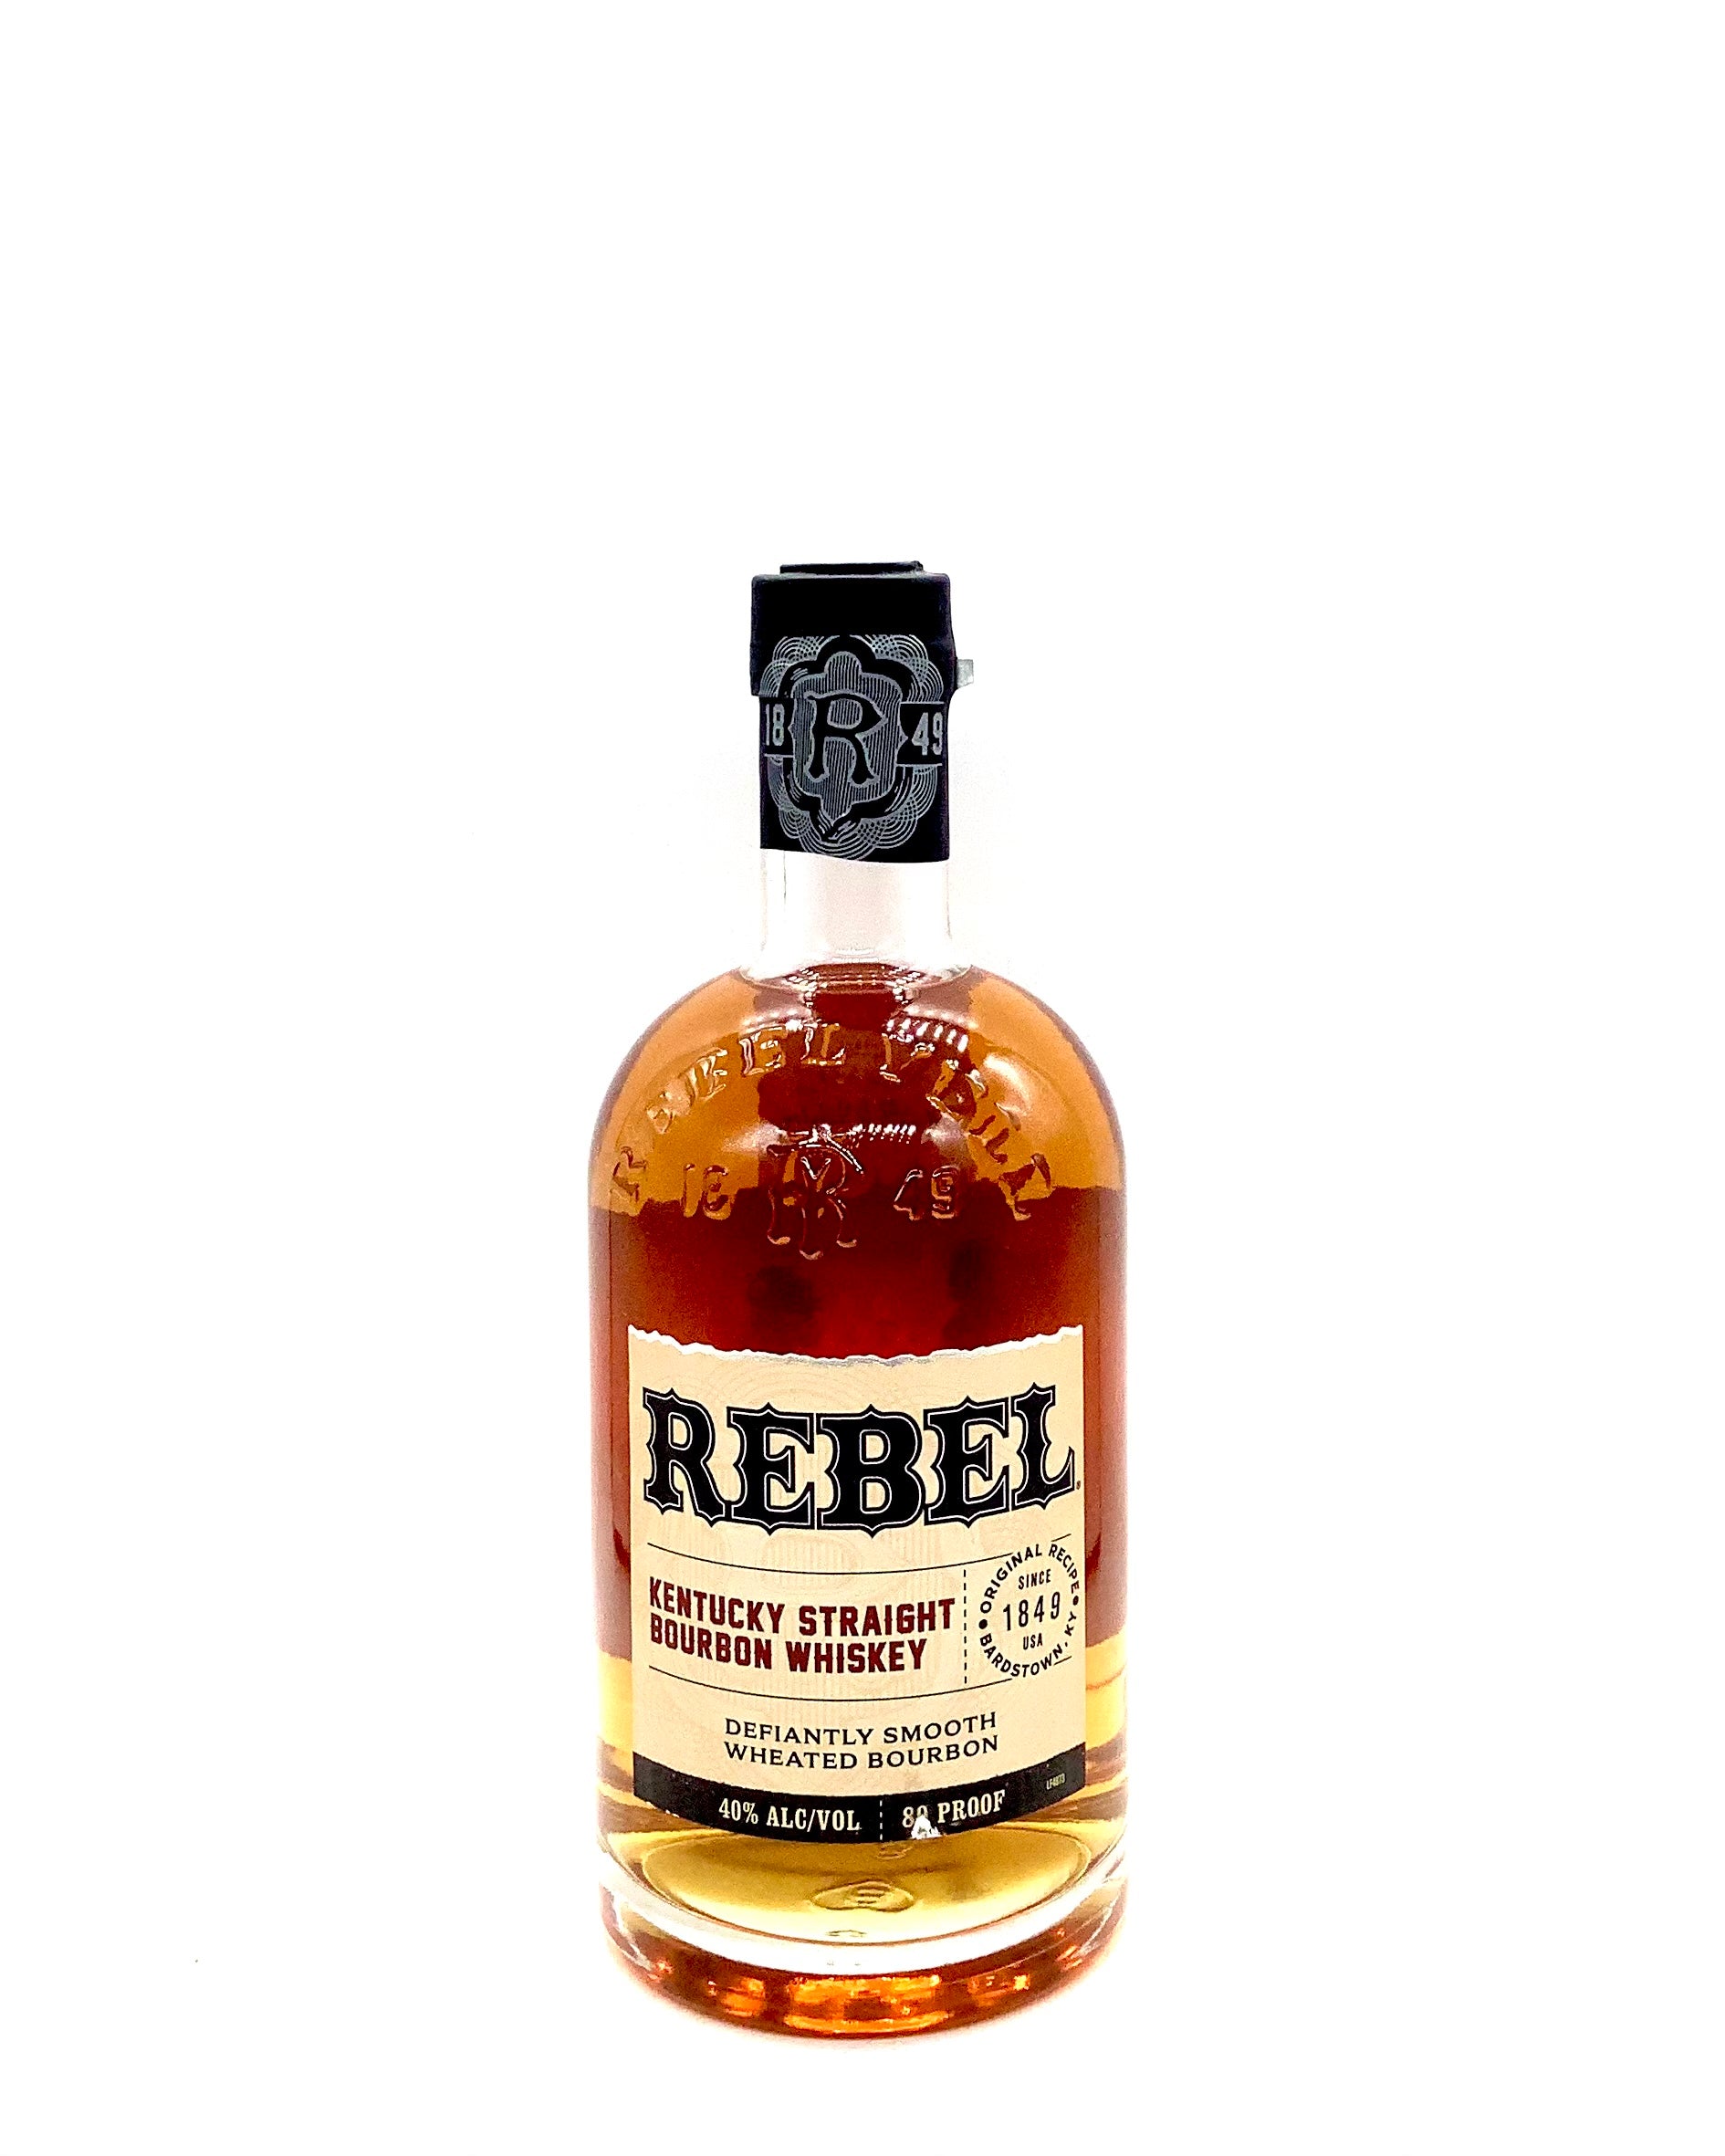 Rebel 100 Kentucky Straight Bourbon Whiskey 750ml